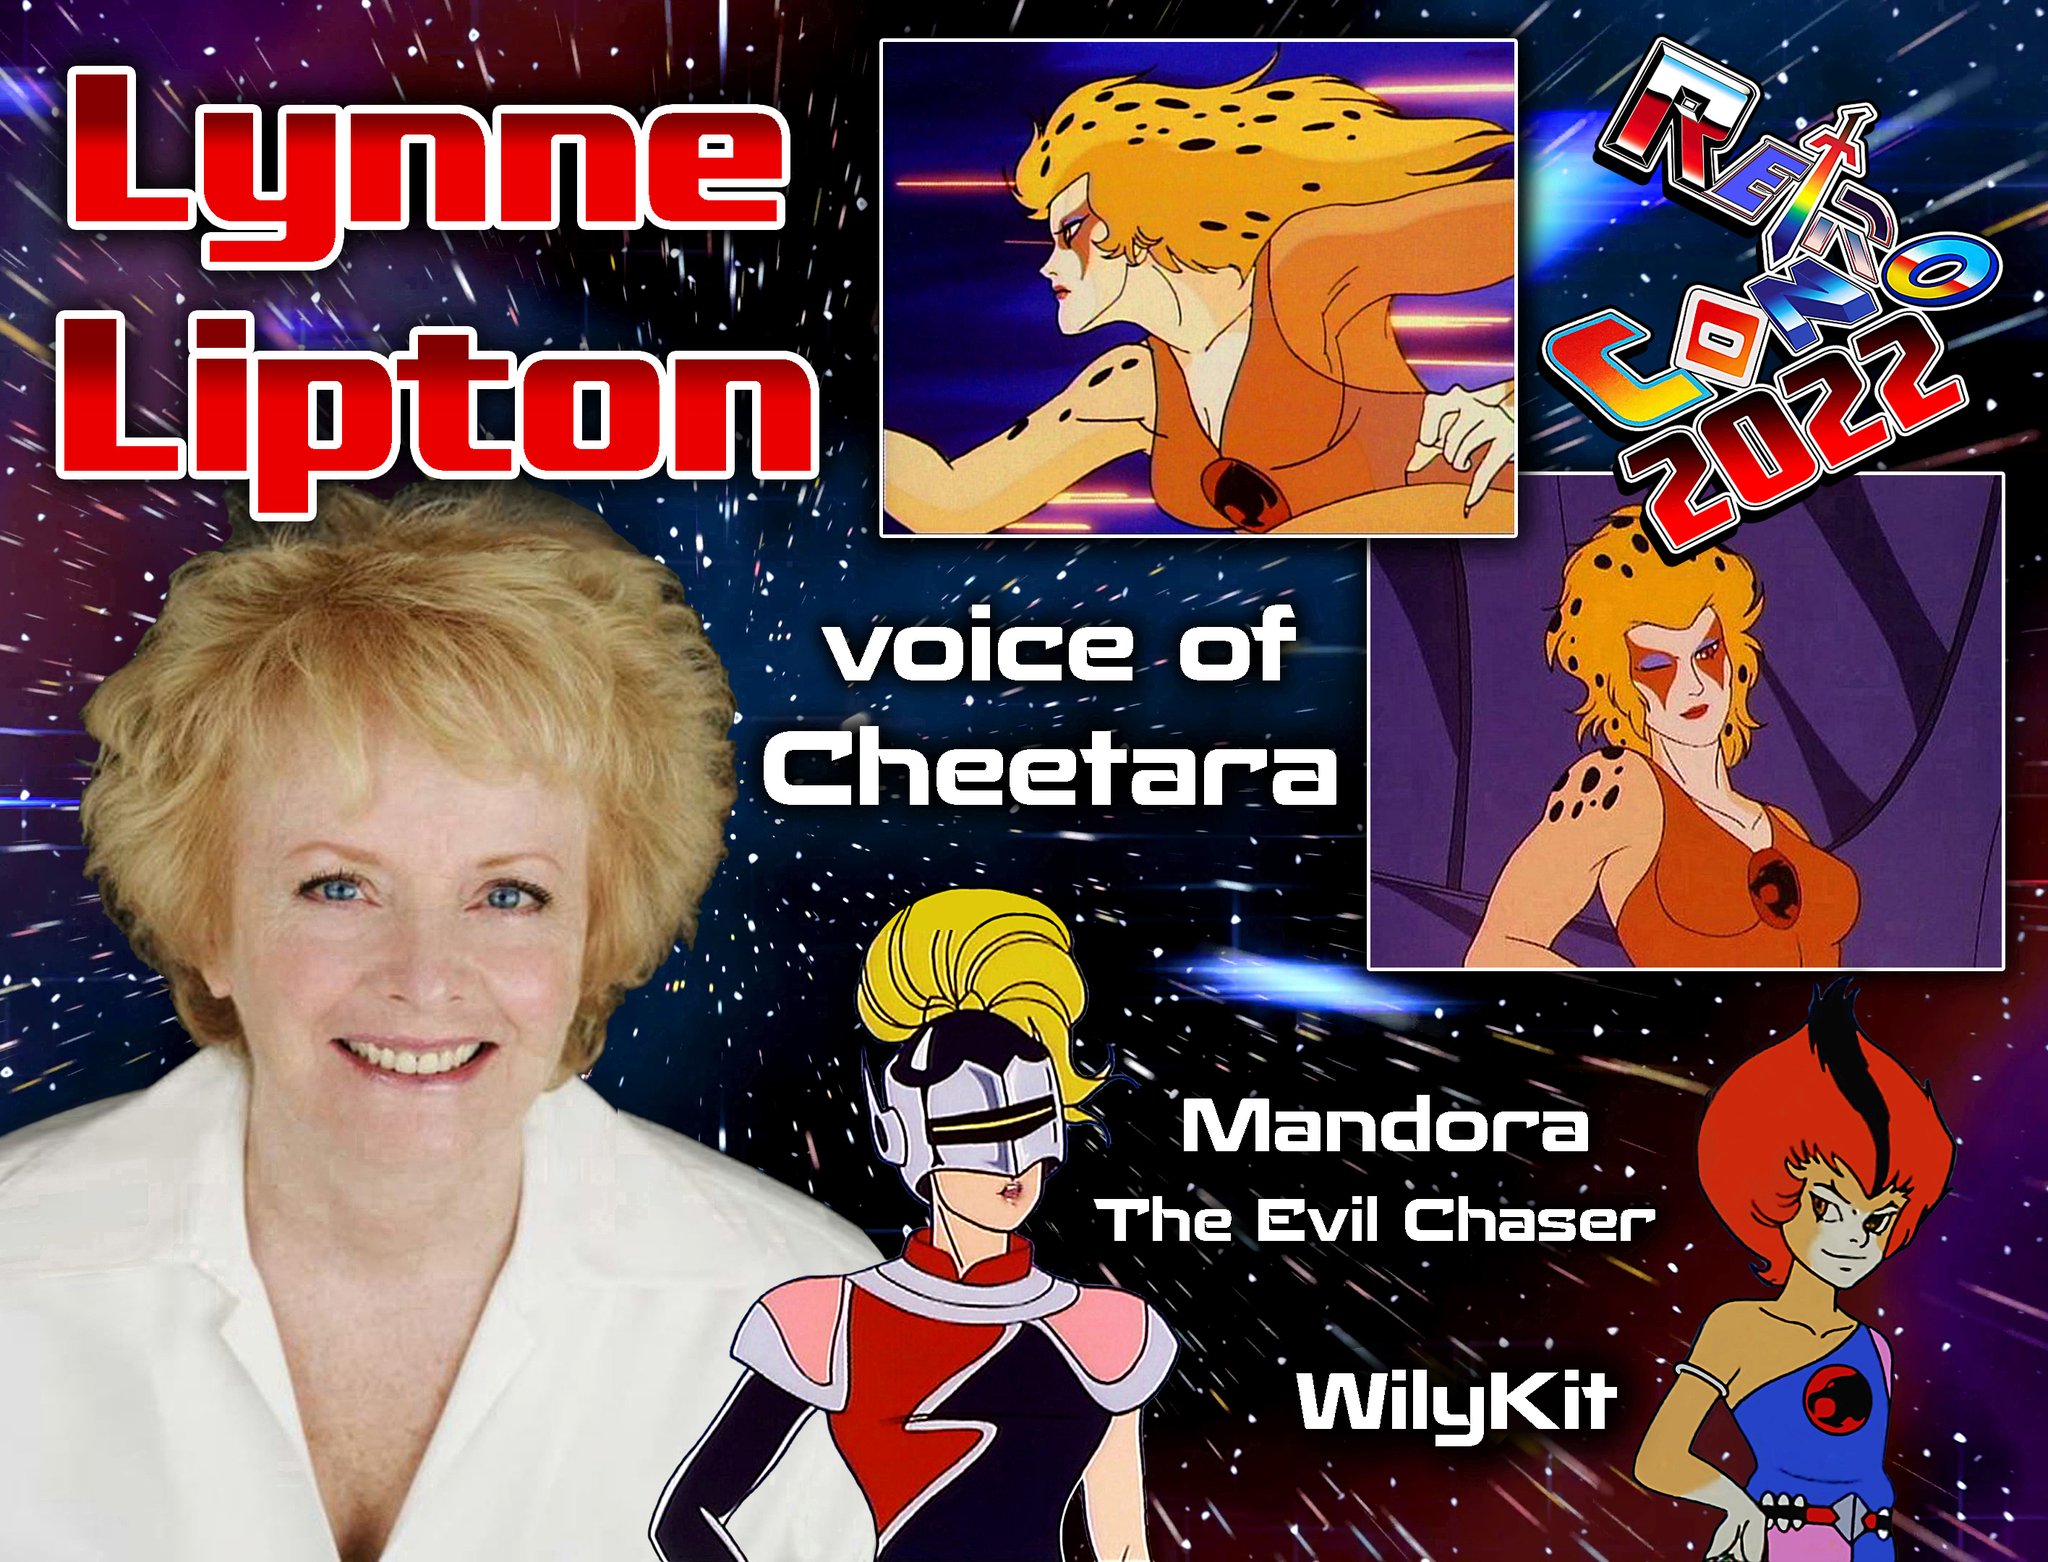 Thundercats - 4K Cheetara Autograph Lynne Lipton